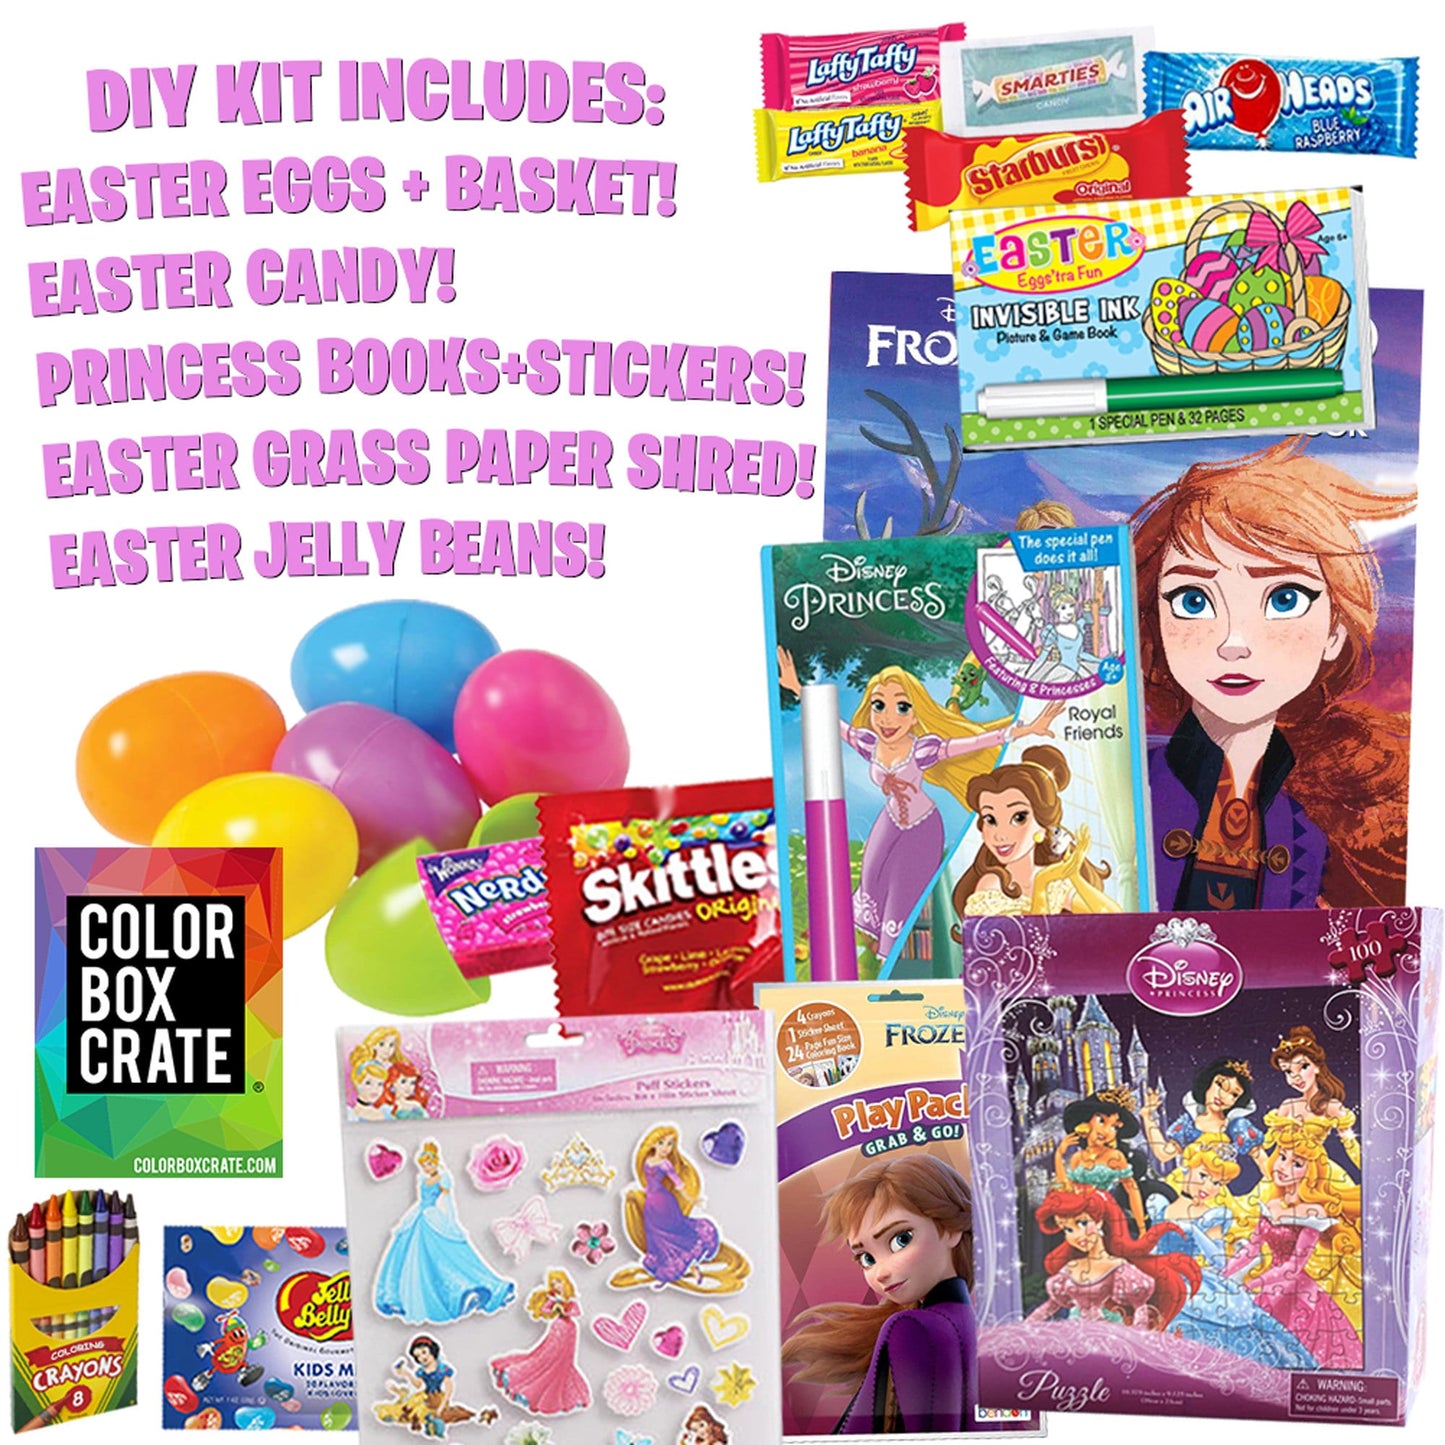 PREMIUM Disney Princess Easter Basket DIY Kit, 25pc Set, Easter Basket Stuffers with Princess Coloring Books, Stickers, Easter Candy + More!